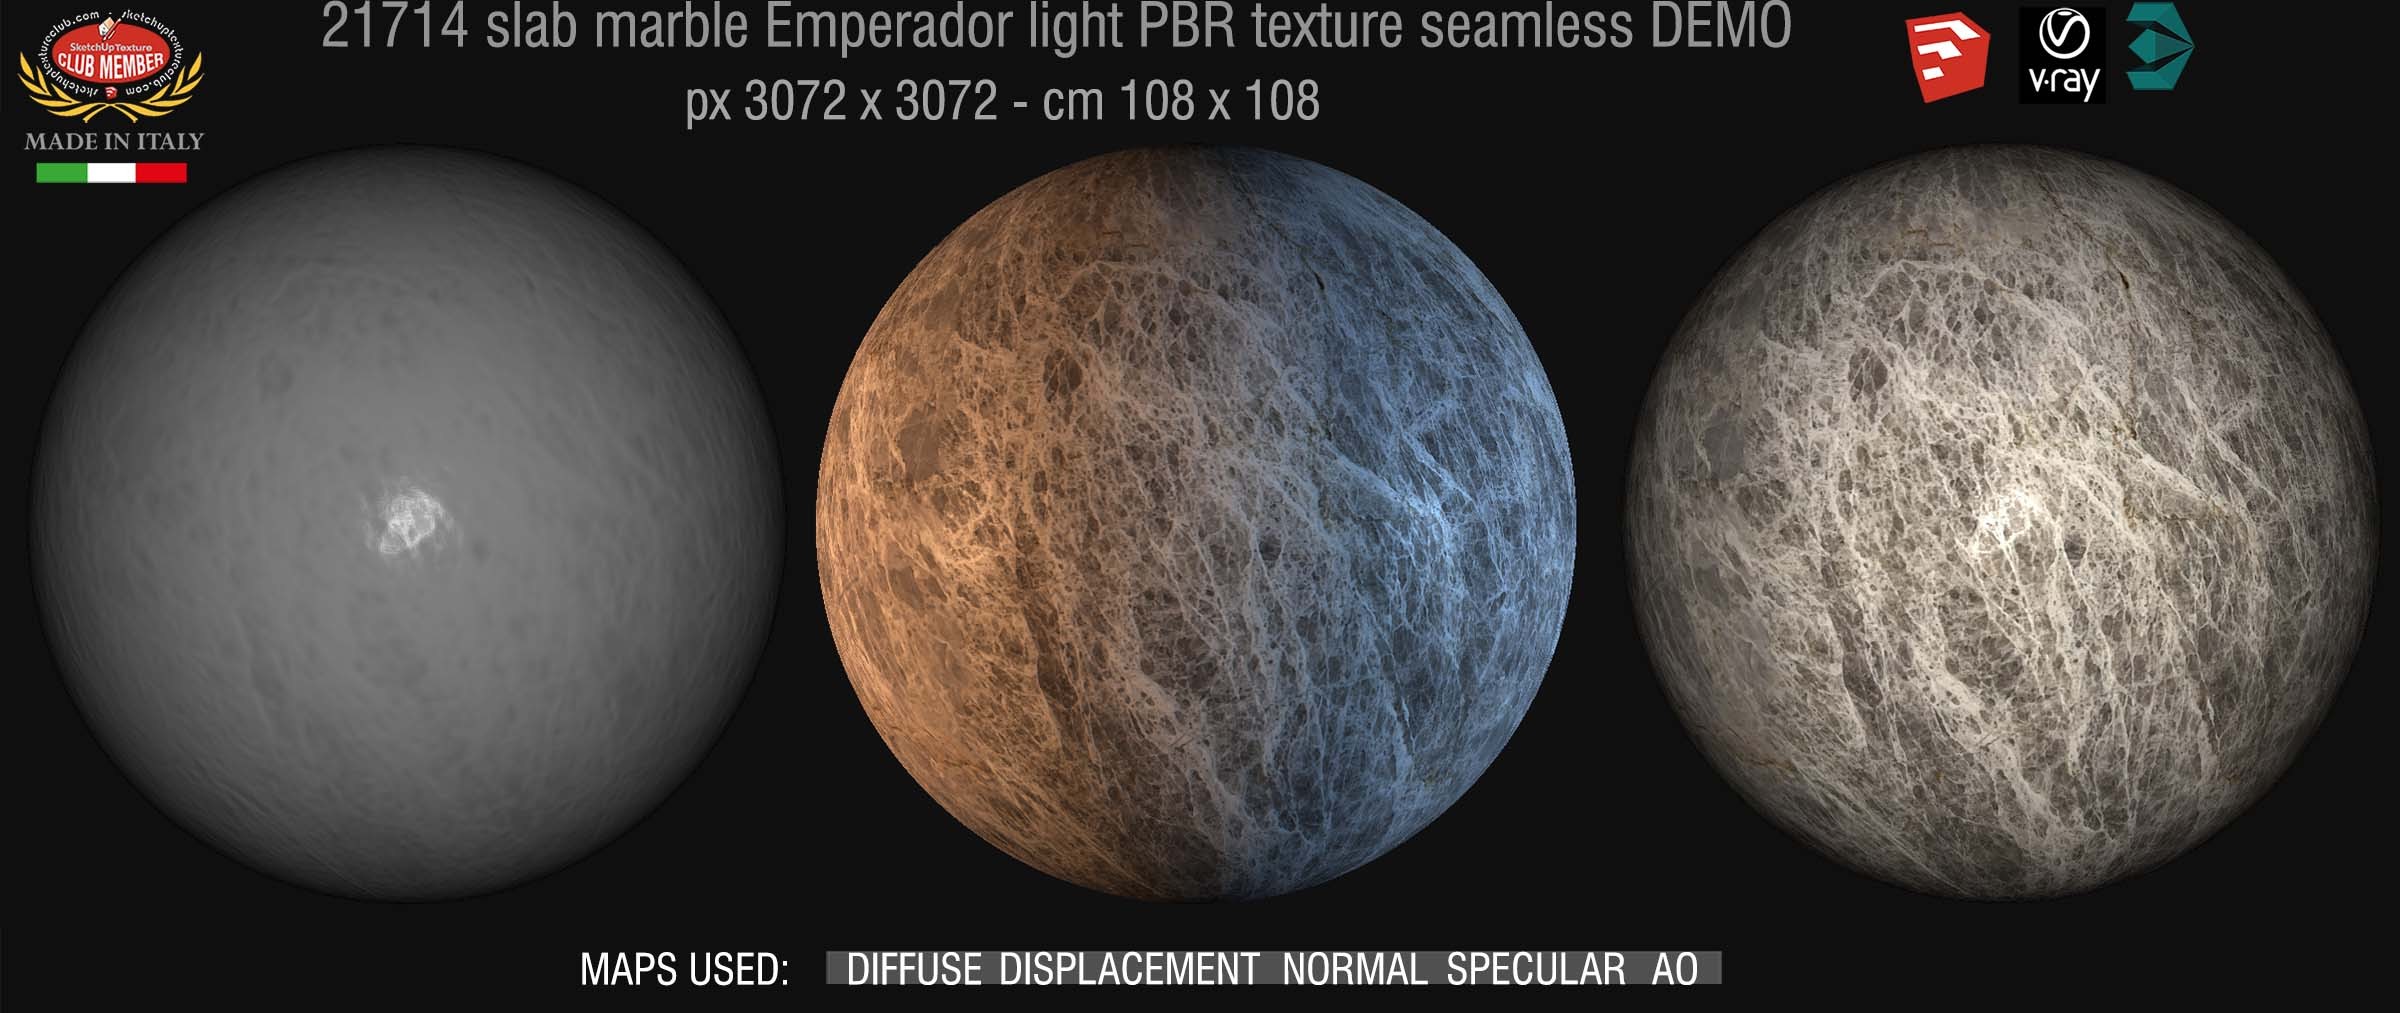 21714 slab marble Emperador light PBR texture seamless DEMO